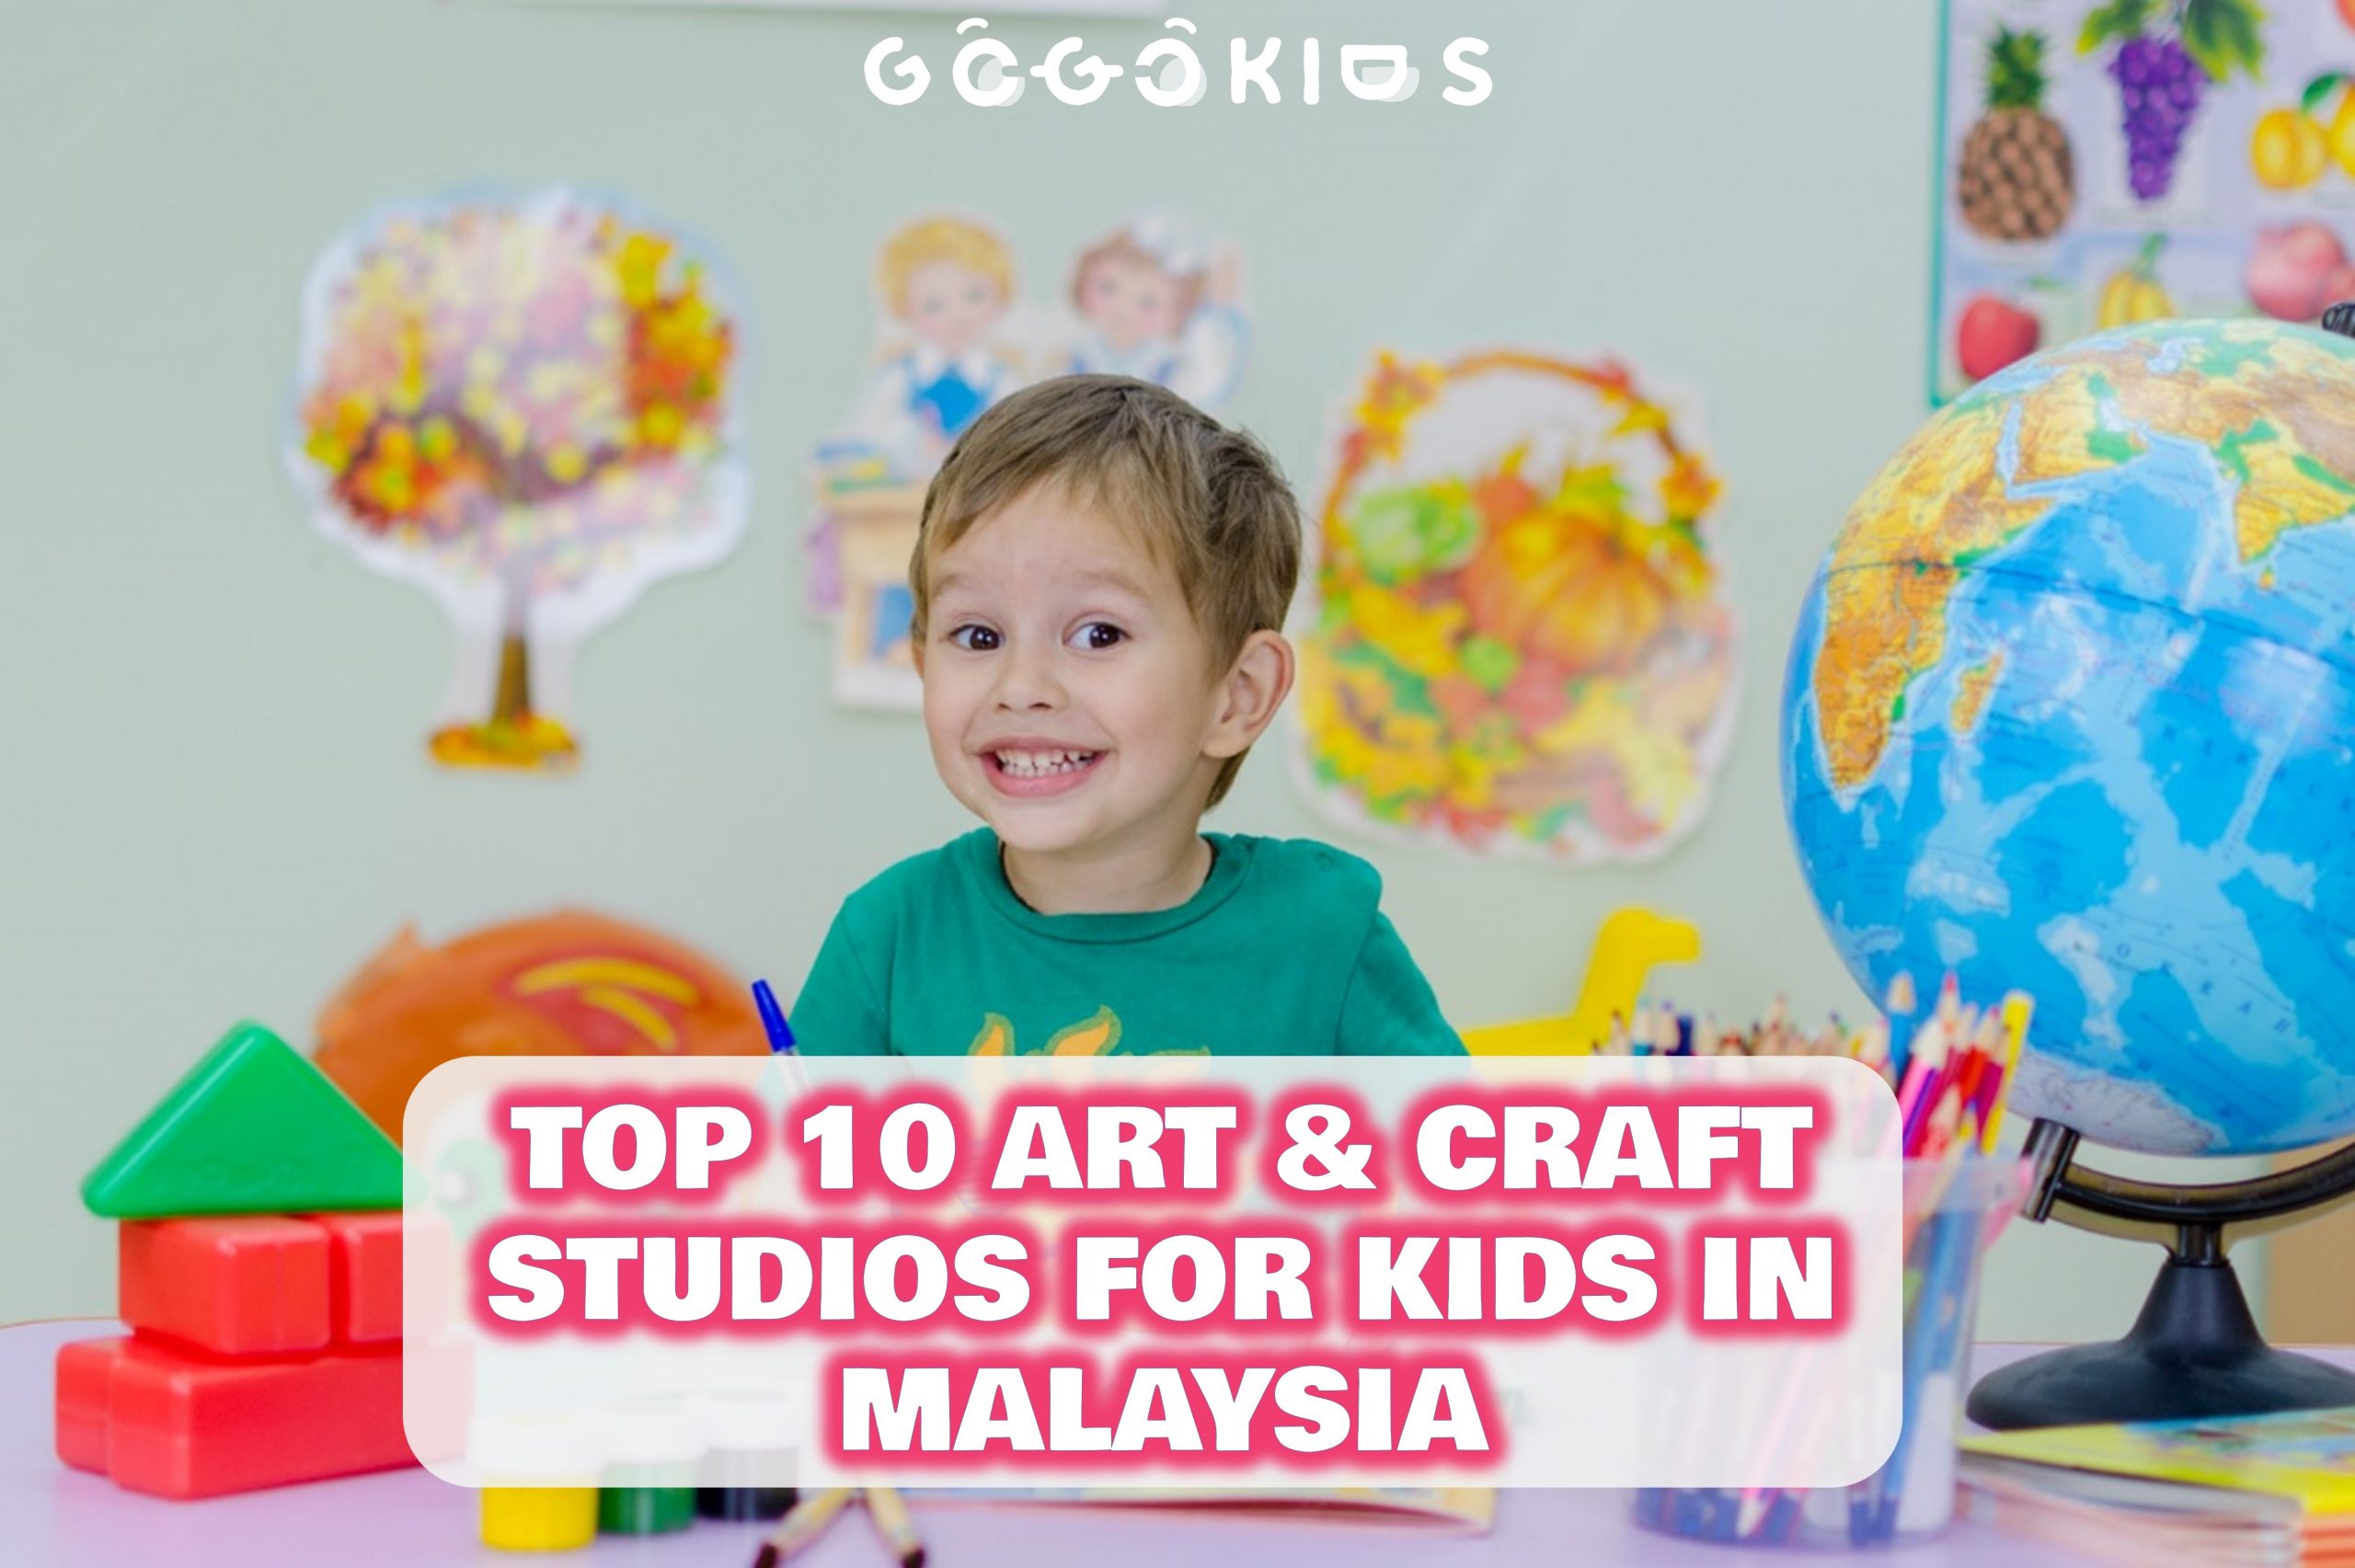 Top 10 Art & Craft Studios for Kids in Malaysia